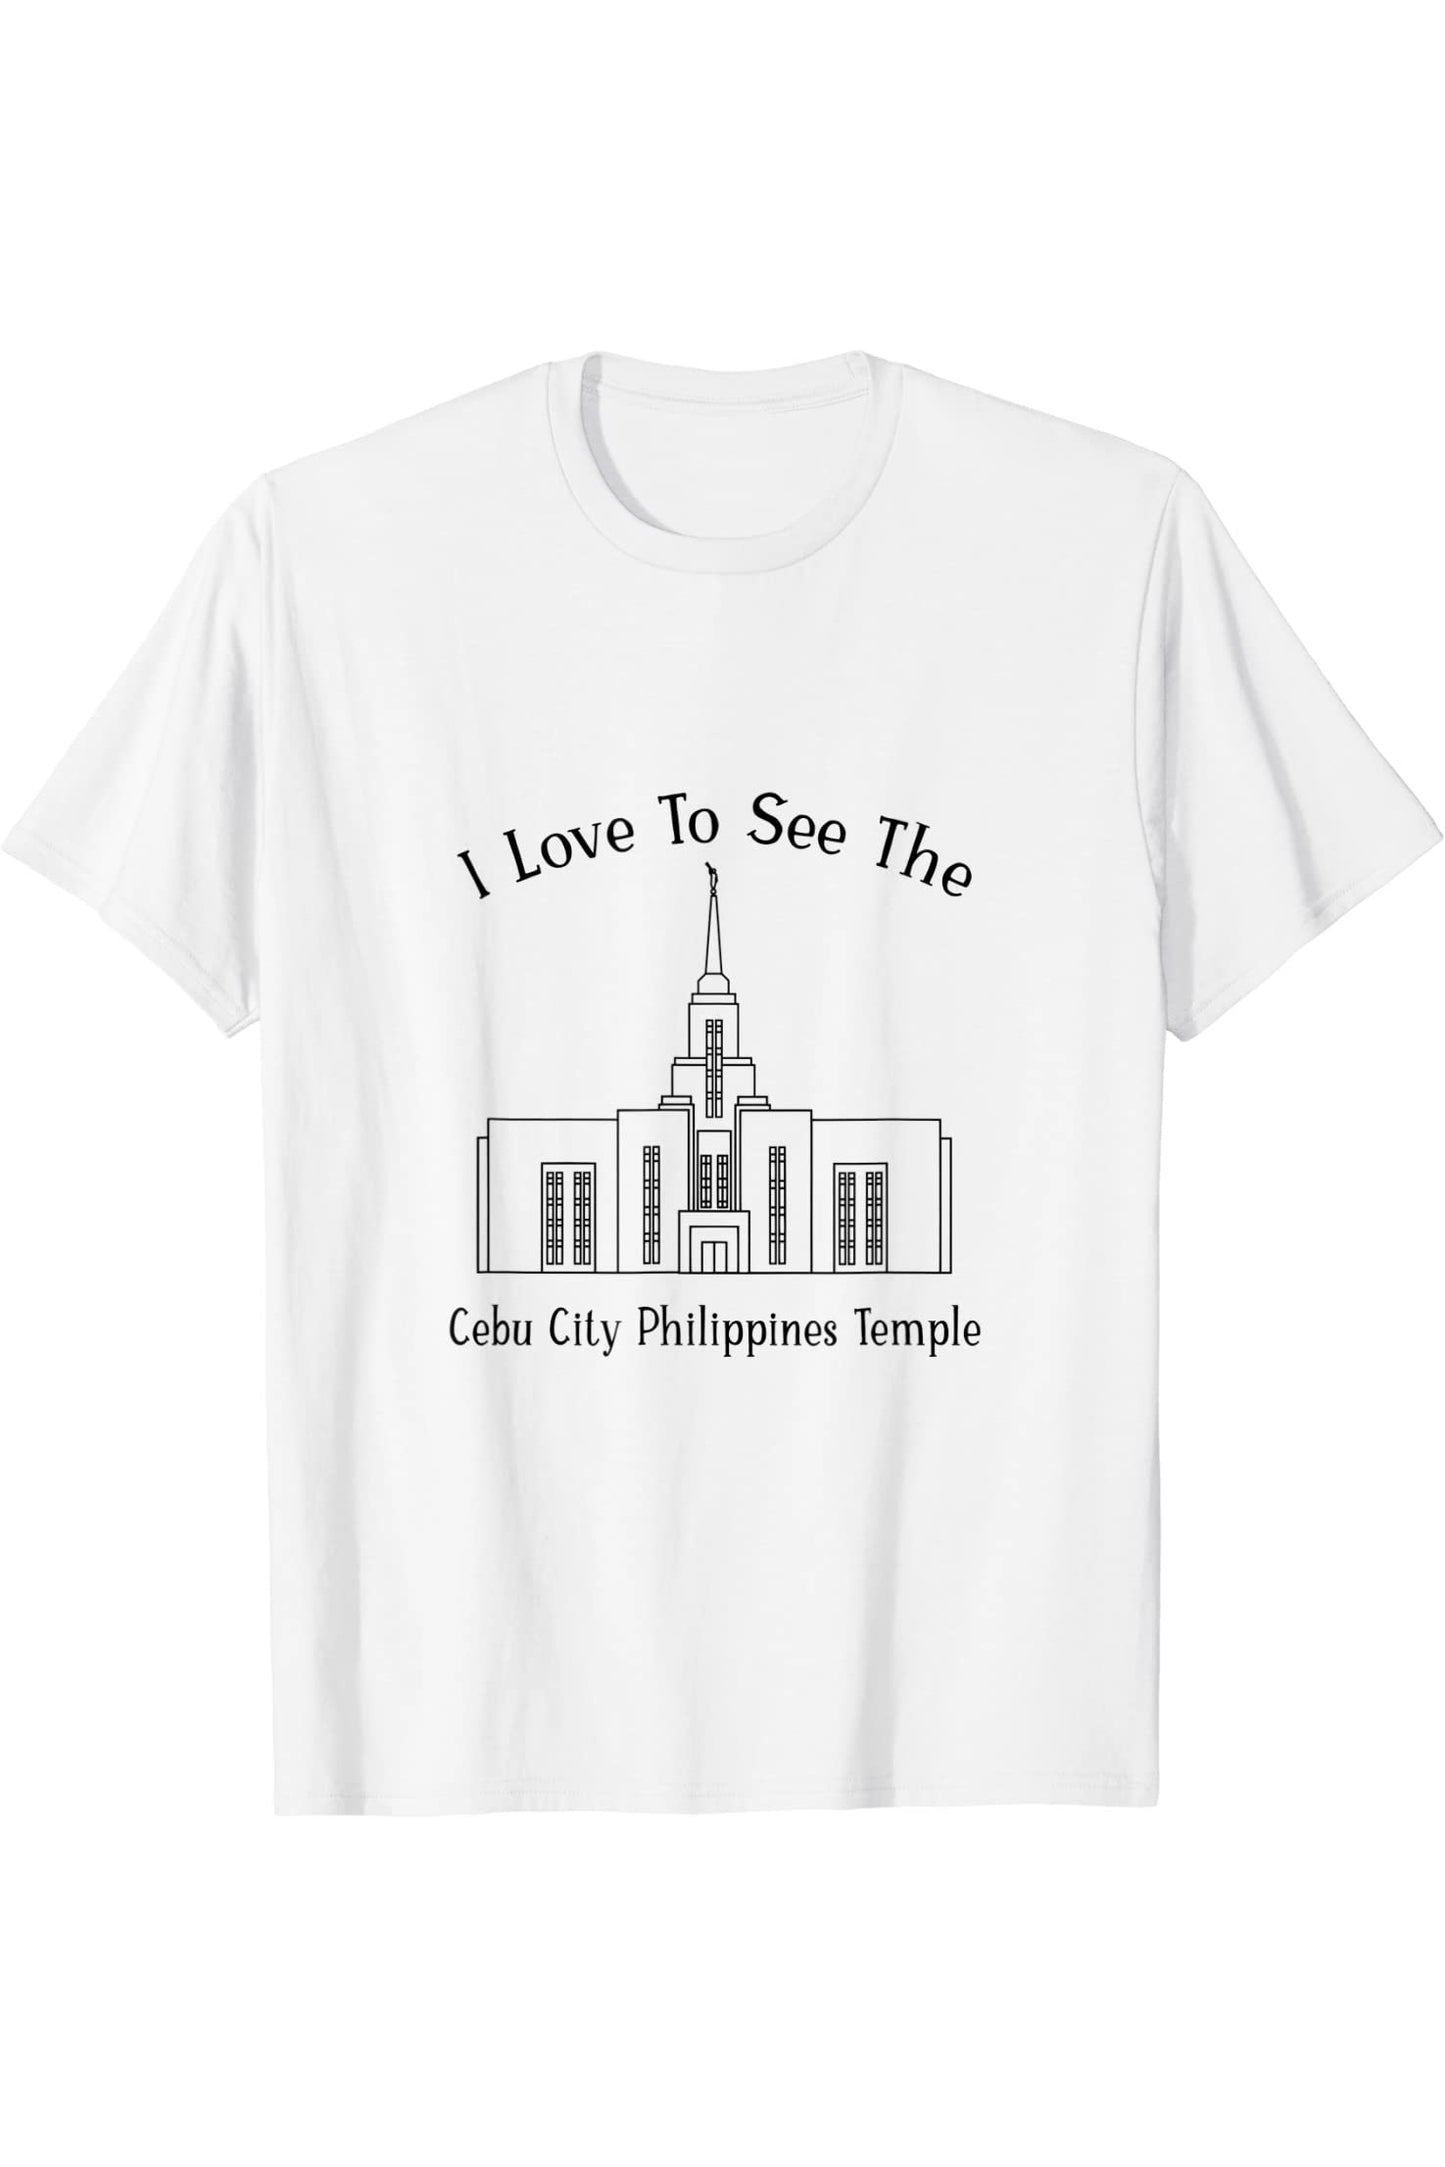 Cebu City Philippines Temple T-Shirt - Happy Style (English) US